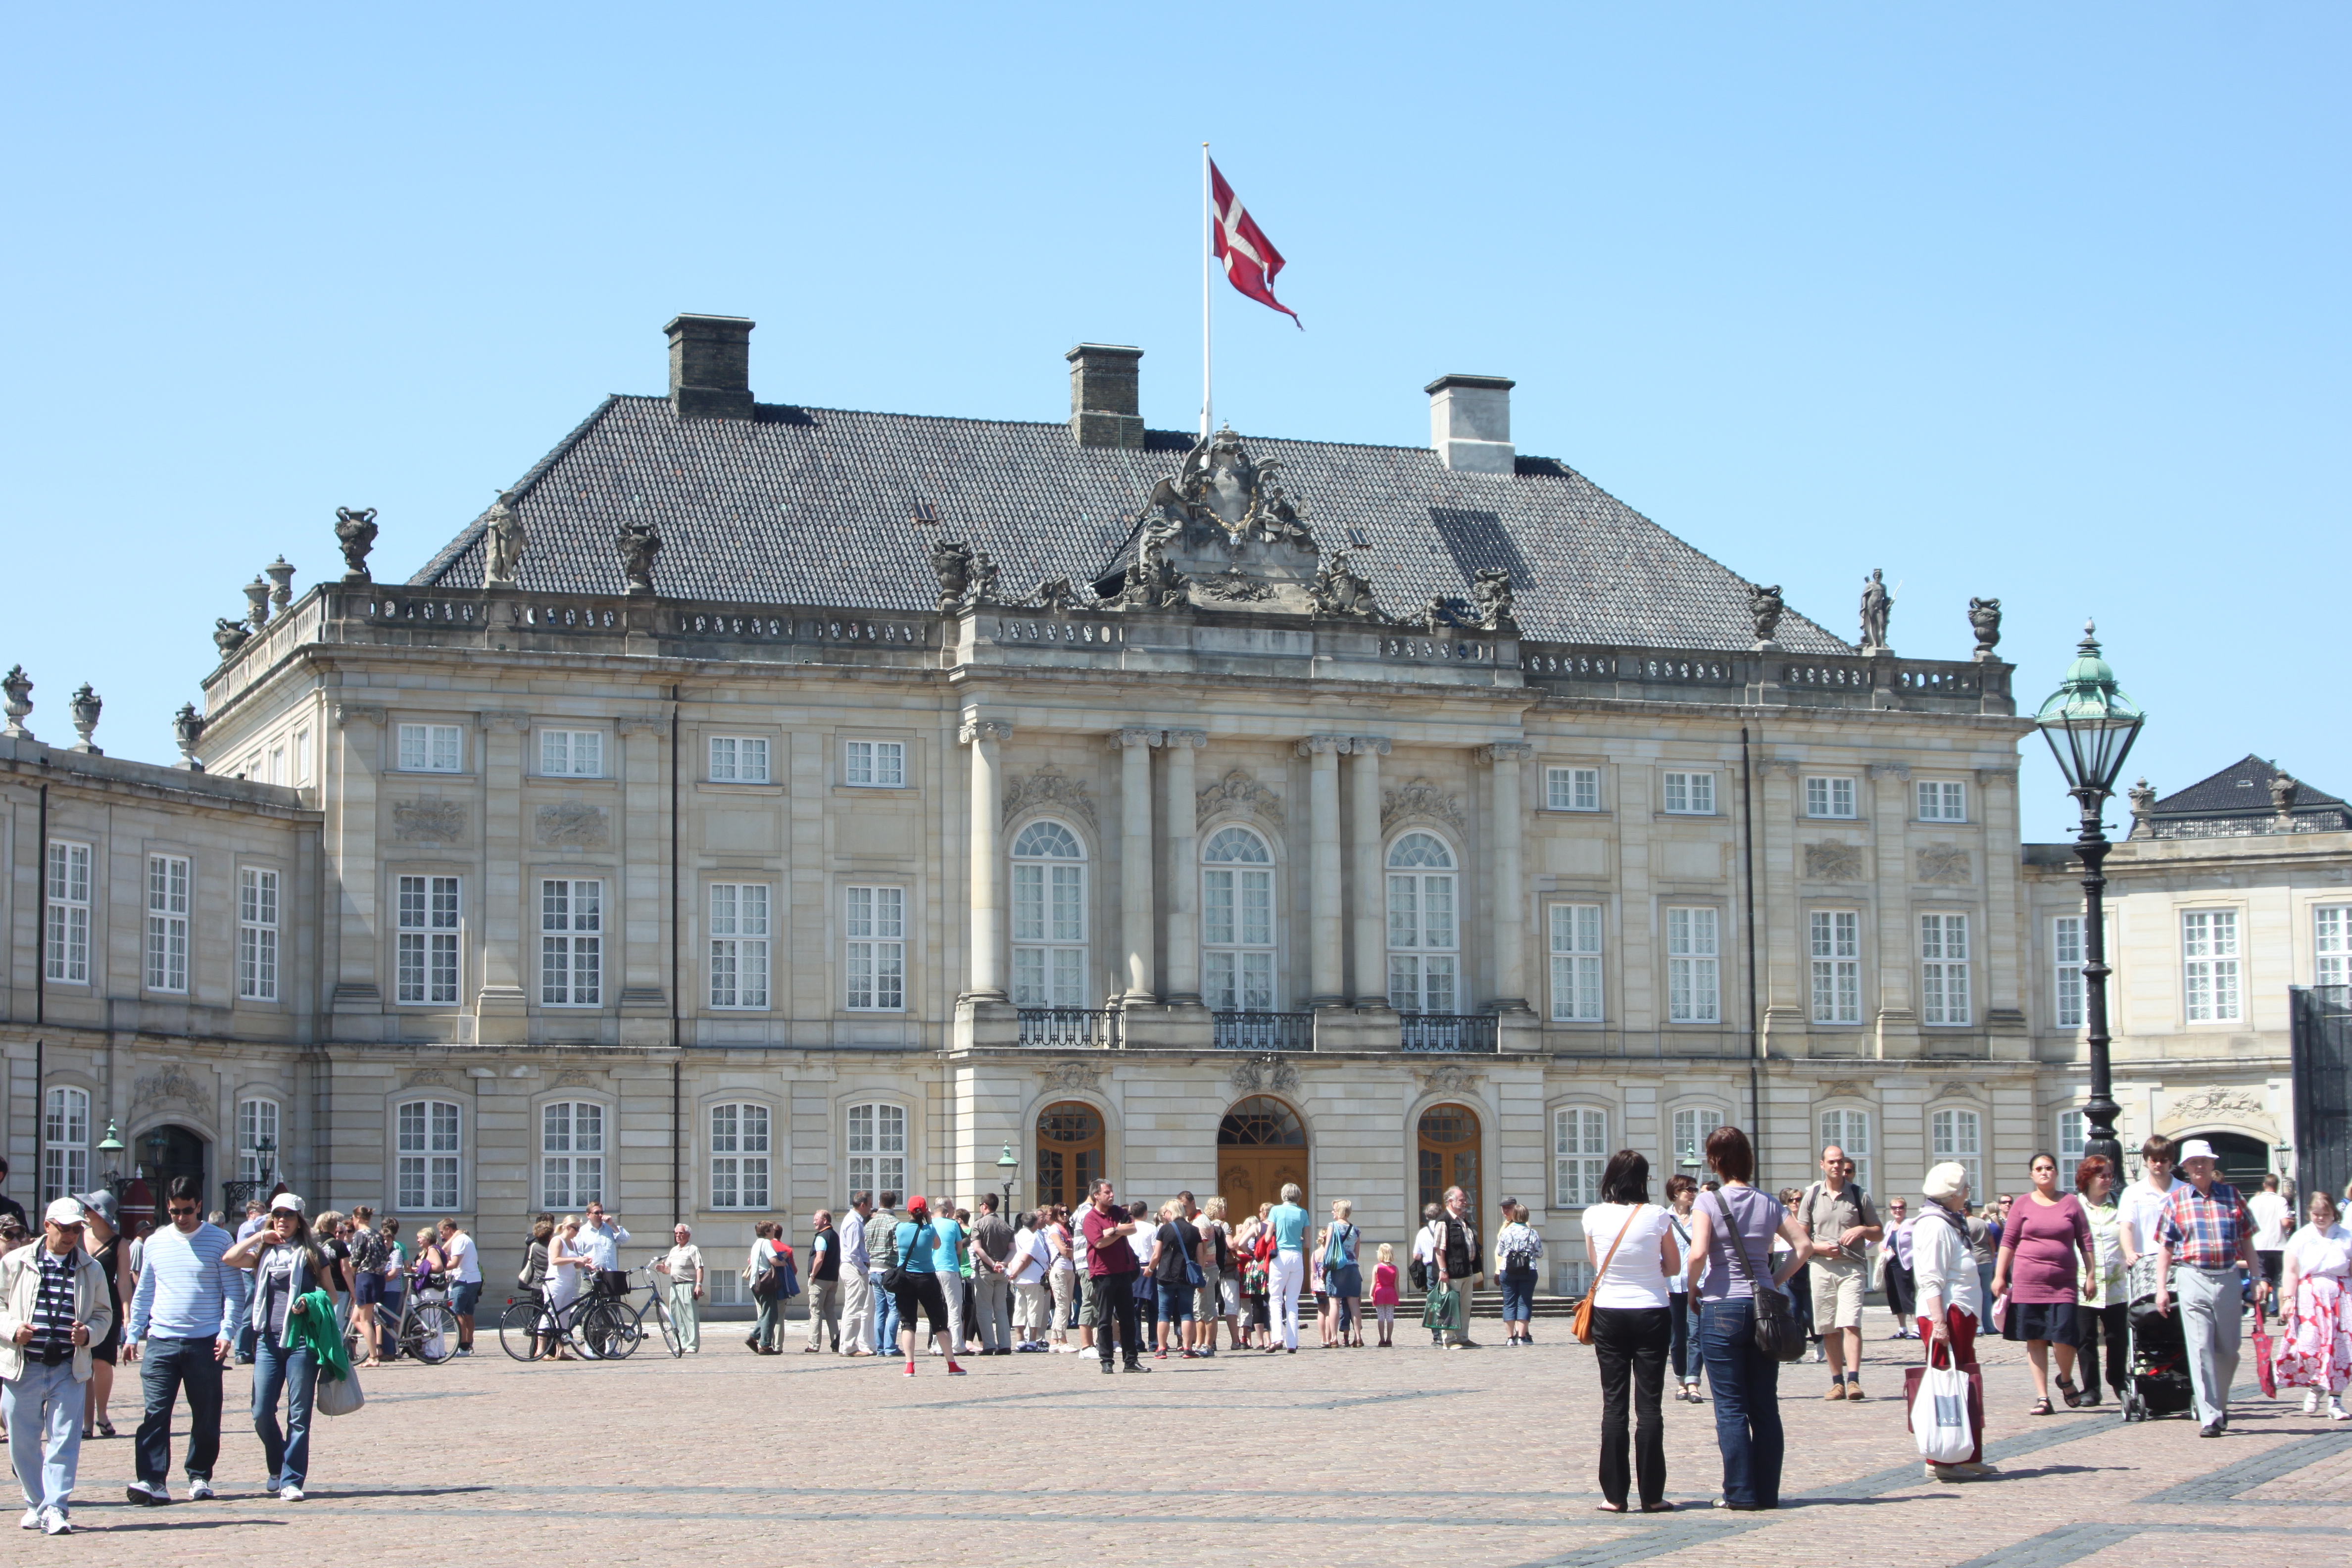 Amalienborg Palace in Copenhagen, Denmark